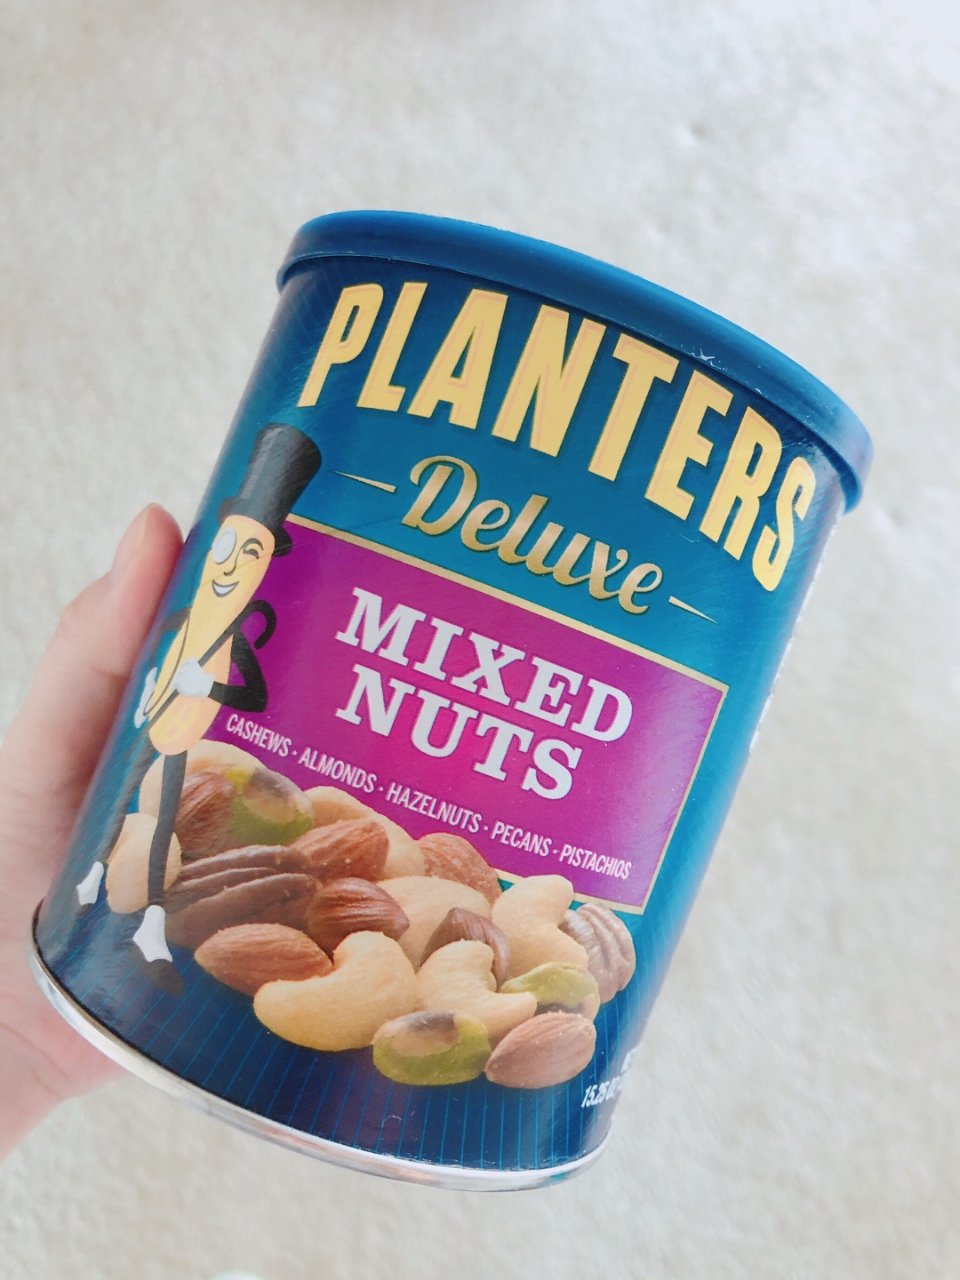 Planters 绅士,mixed nut